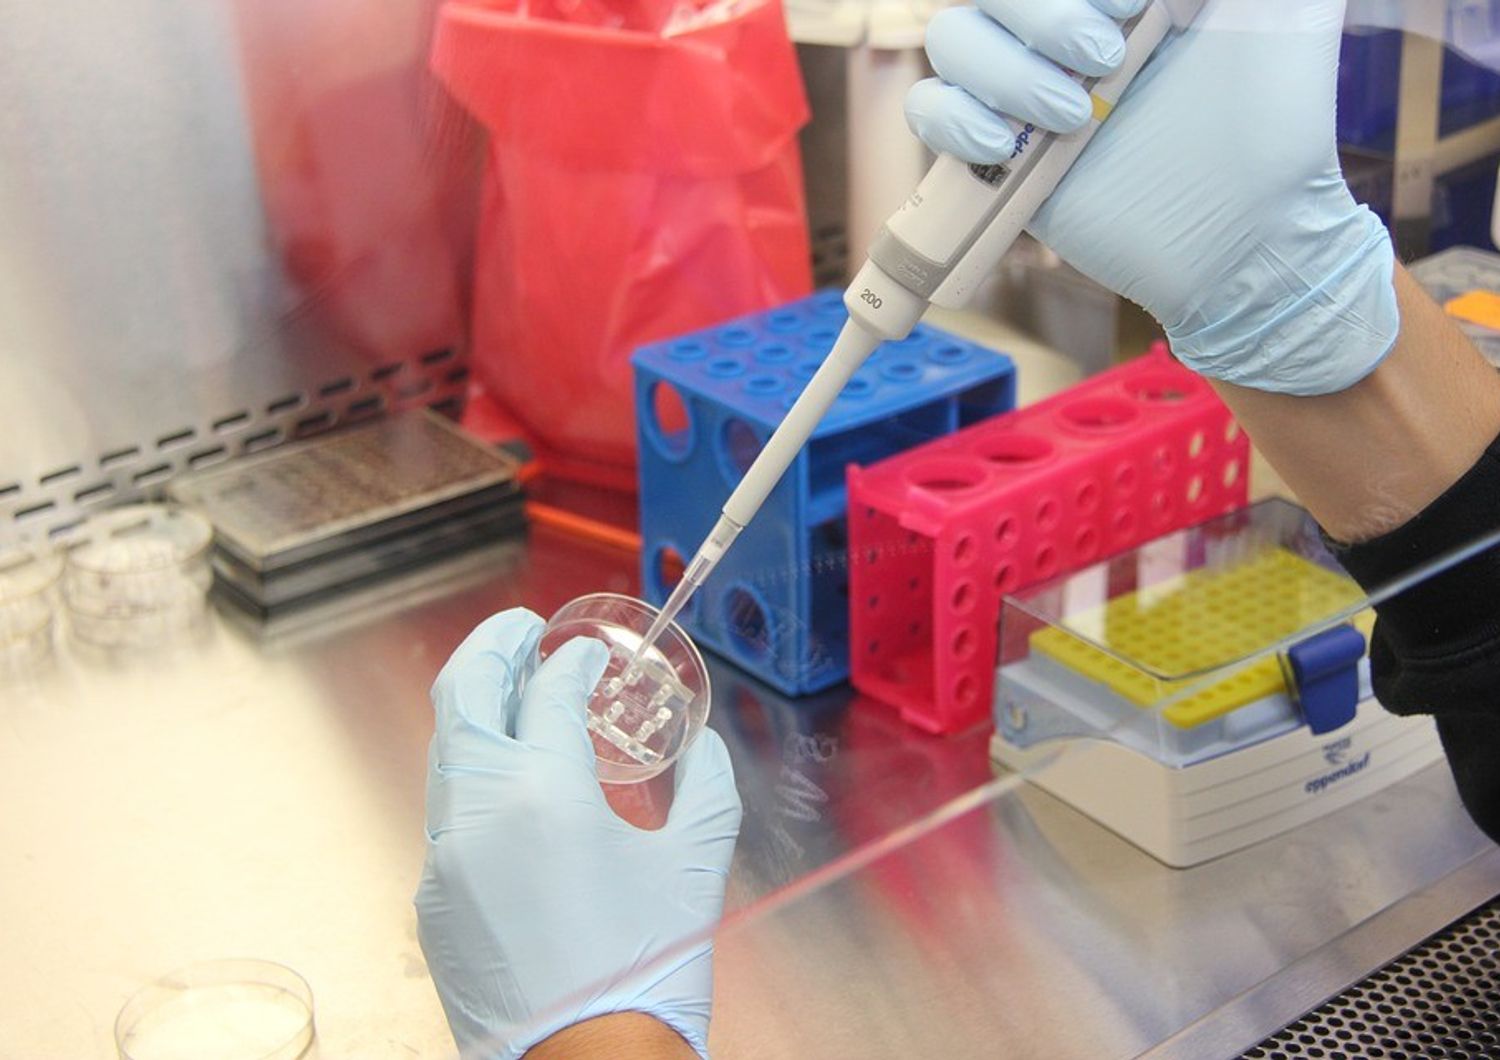 ricerca ricercatori sangue provette analisi campione medicina - pixabay